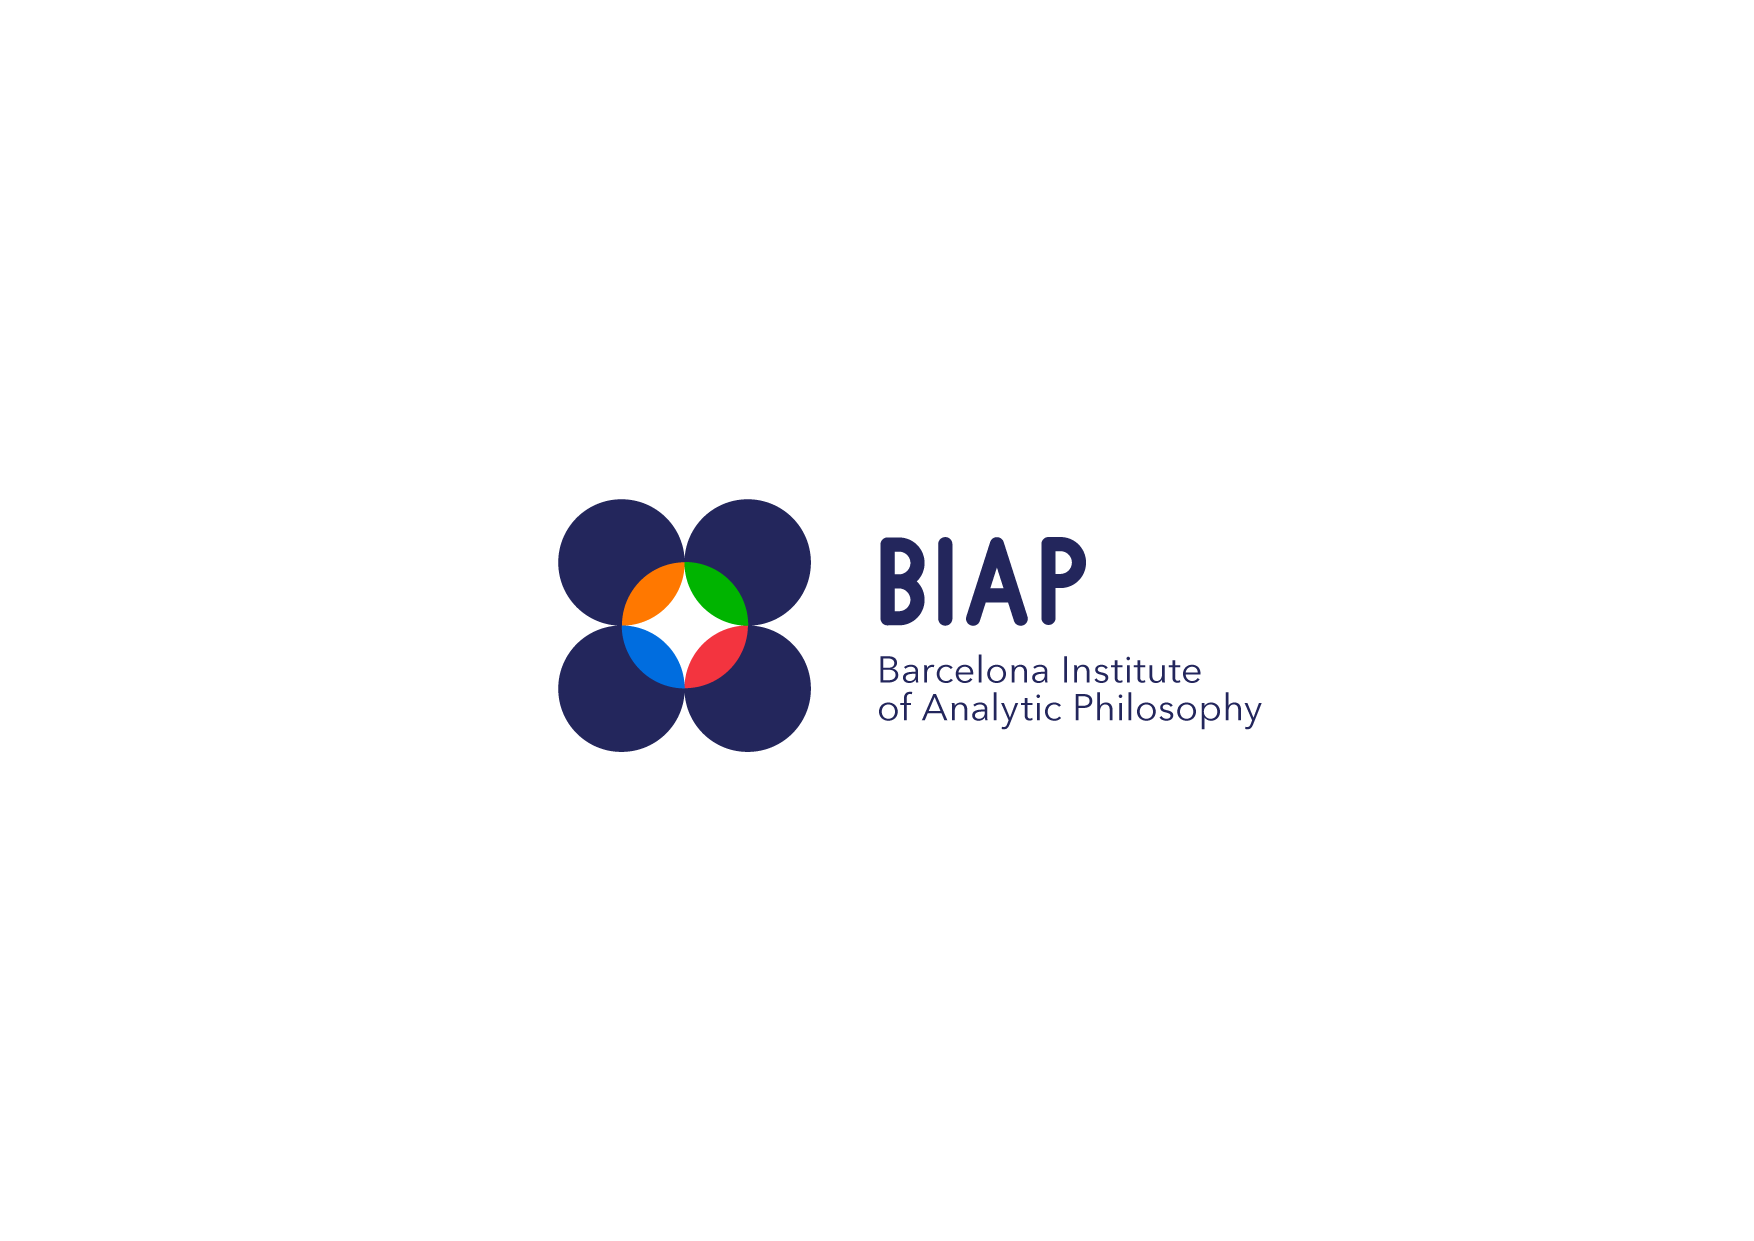 biap_behance-02.png